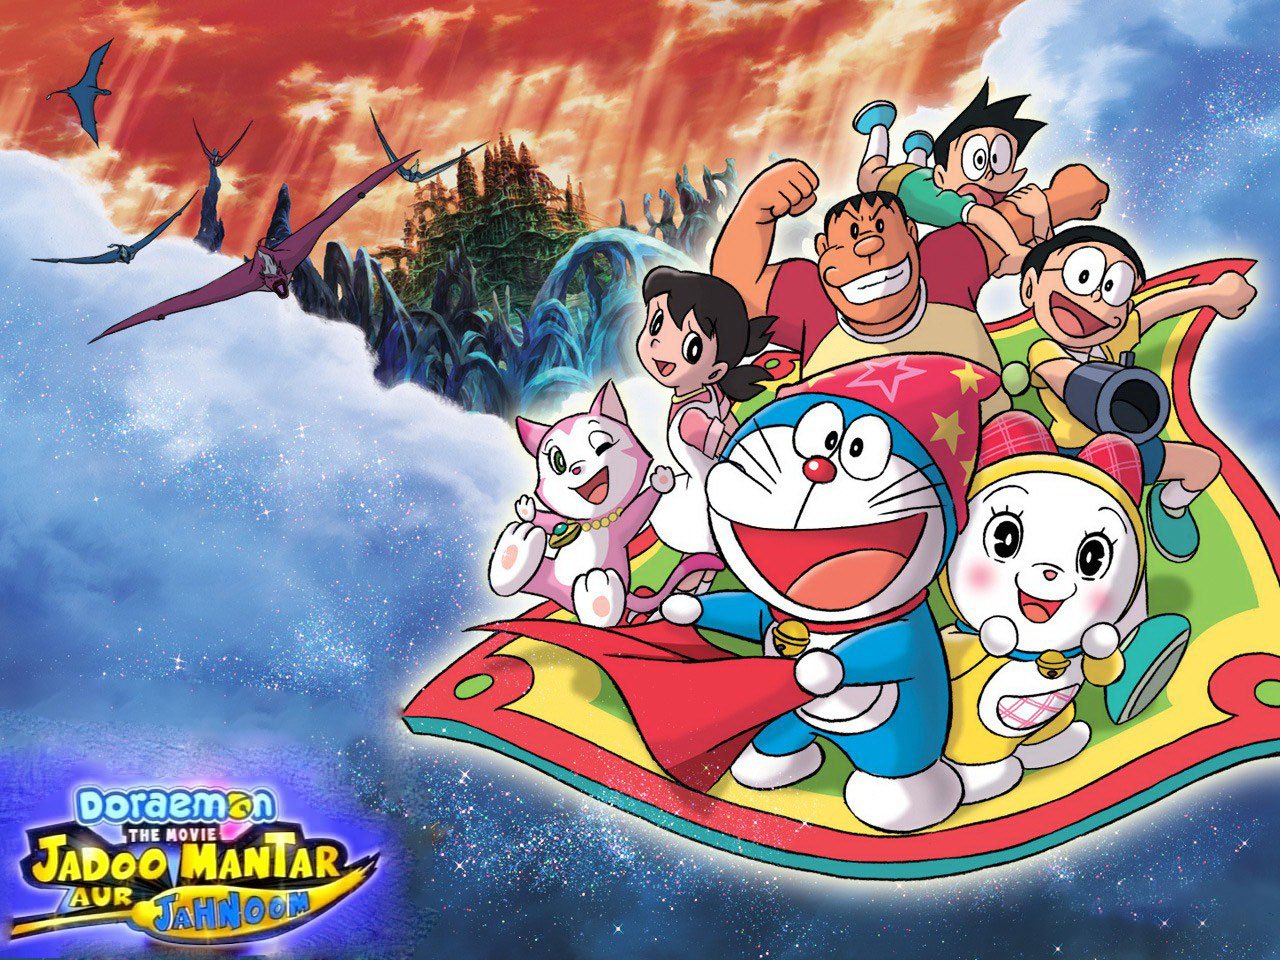 Doraemon Jadoo Mantar Aur Jahnoom Streaming and Download